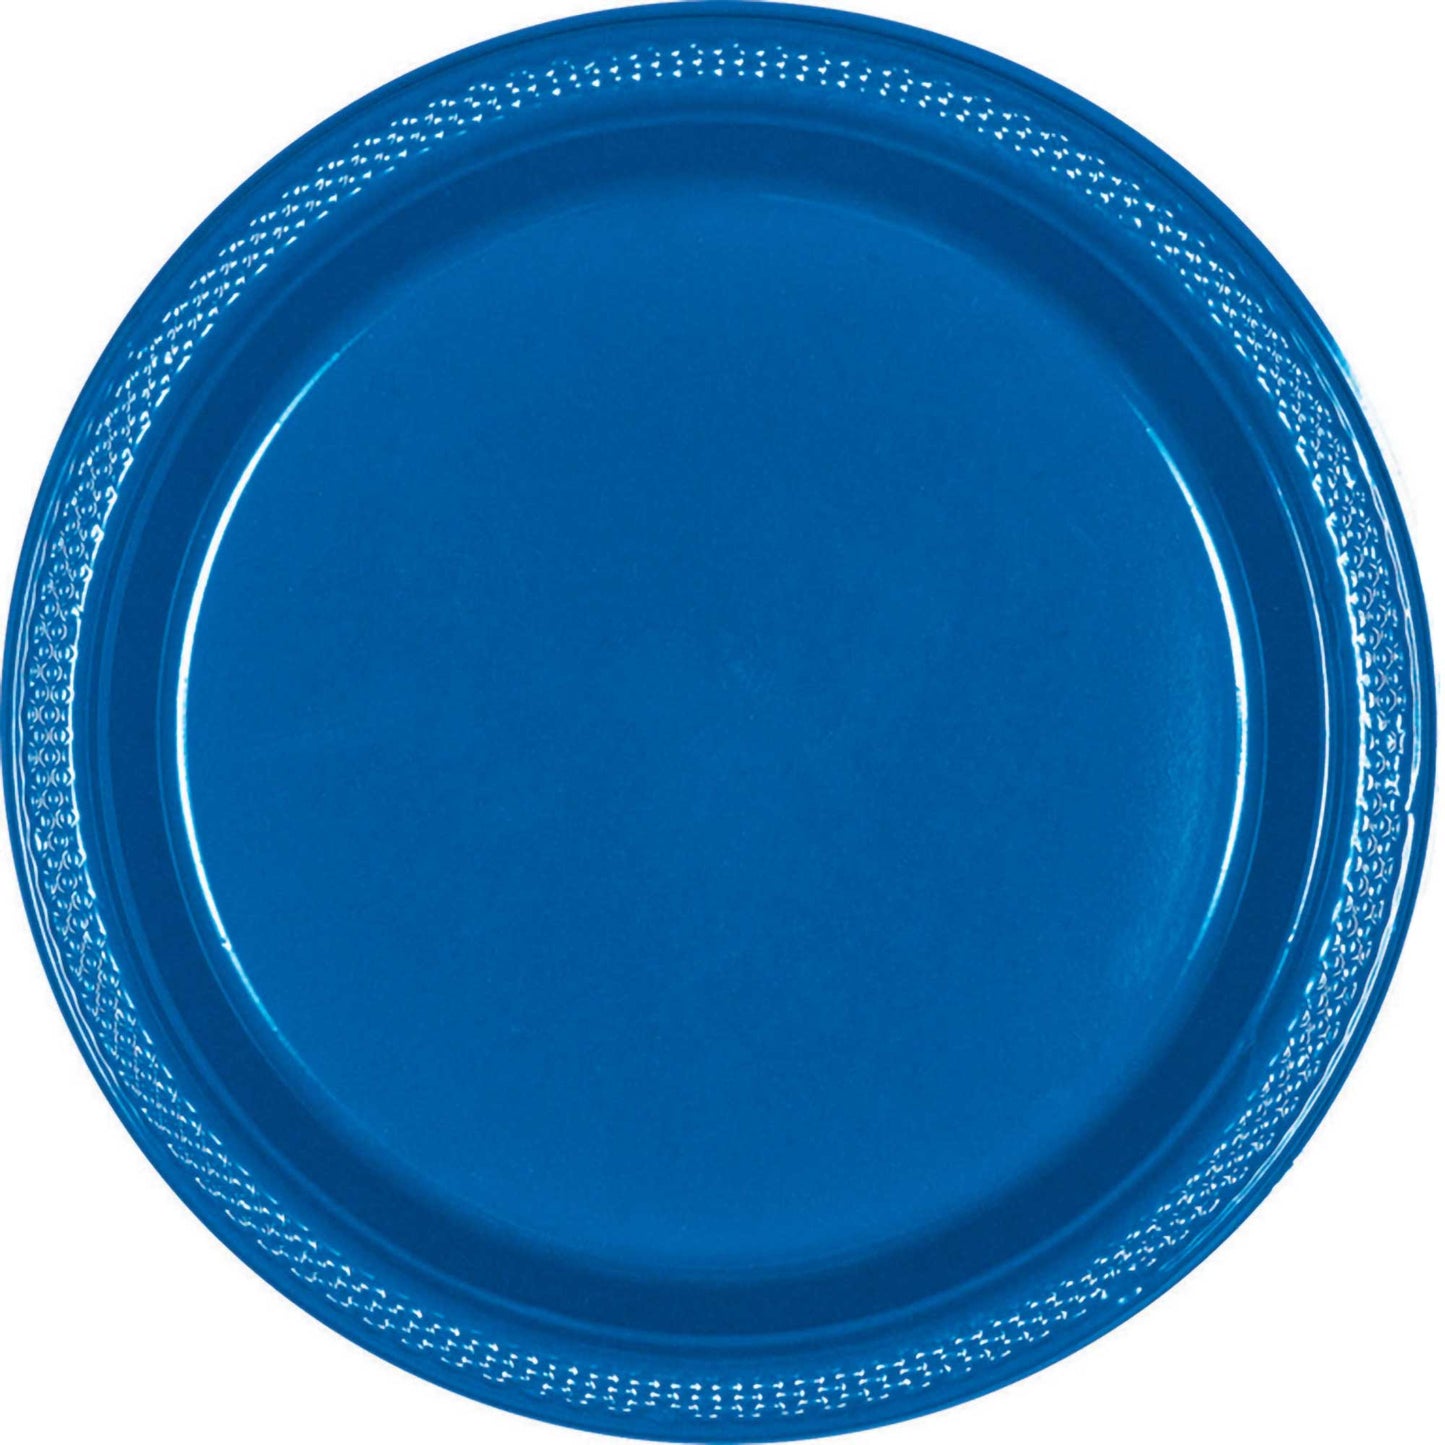 Premium Plastic Plates 26cm 20 Pack - Bright Royal Blue